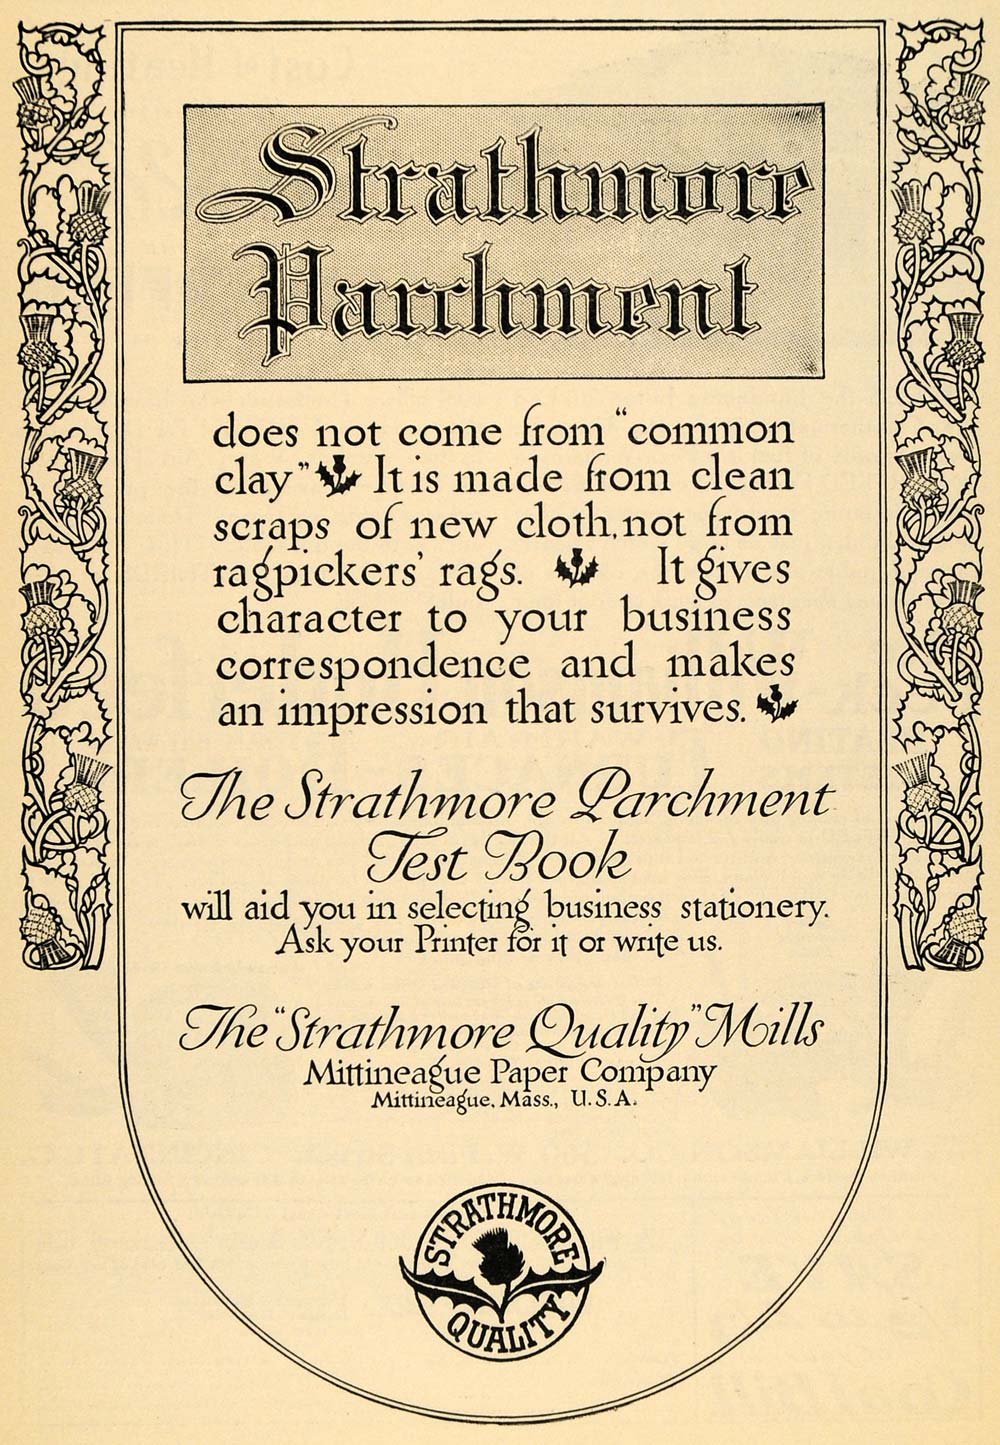 1911 Ad Strathmore Parchment Mittineague Paper Company - ORIGINAL TOM1